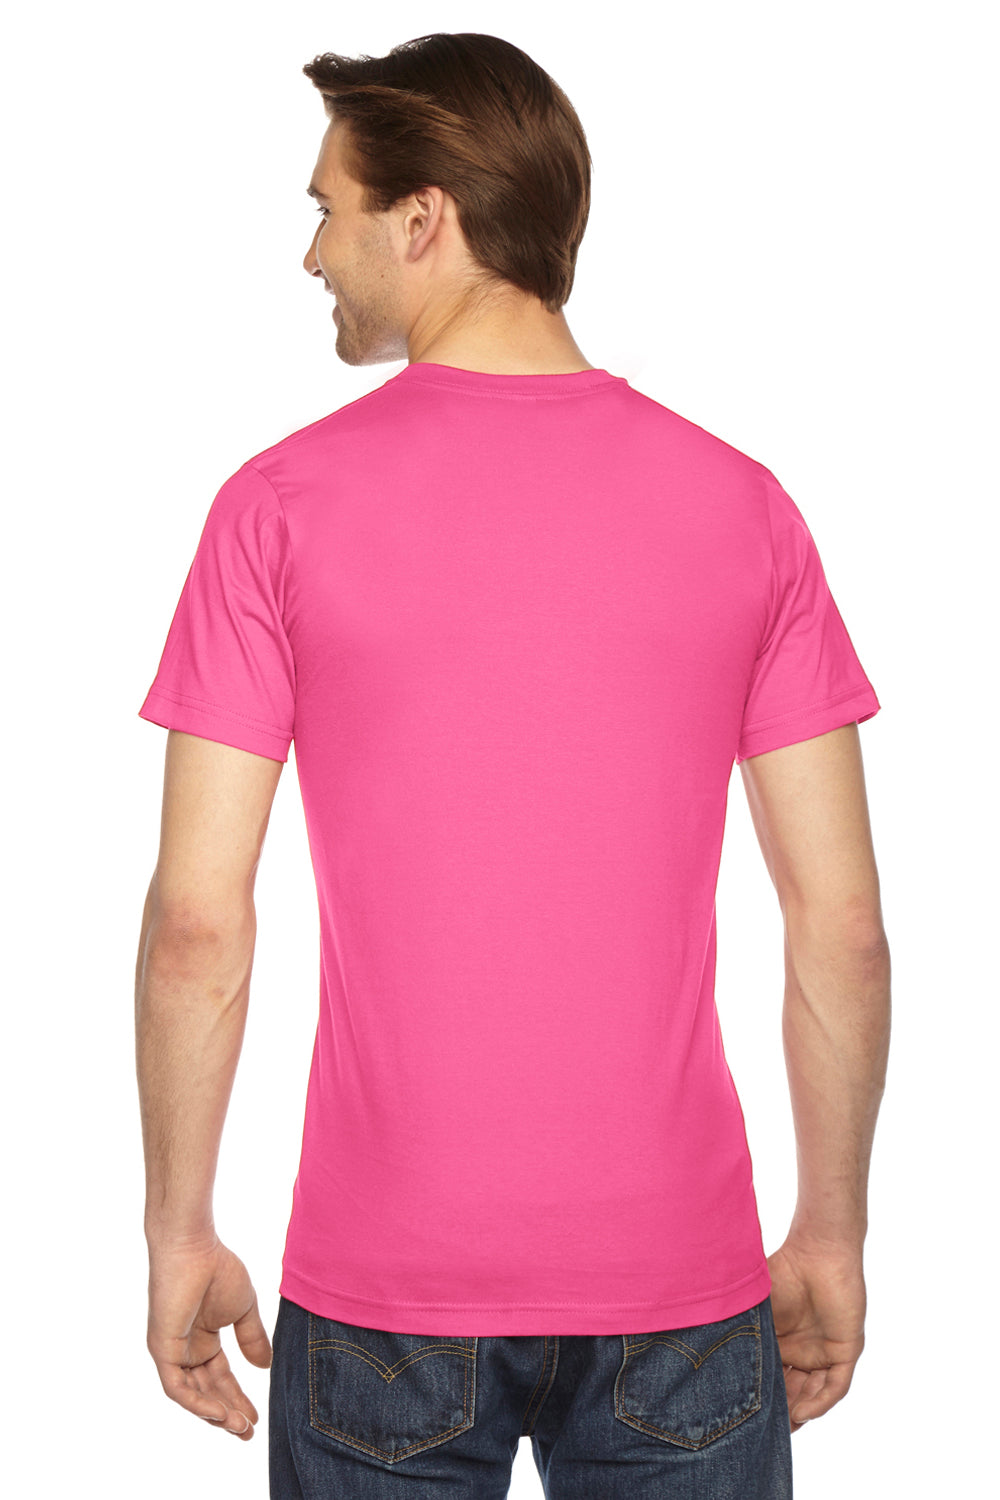 American Apparel 2001W Mens Fine Jersey Short Sleeve Crewneck T-Shirt Fuchsia Pink Back